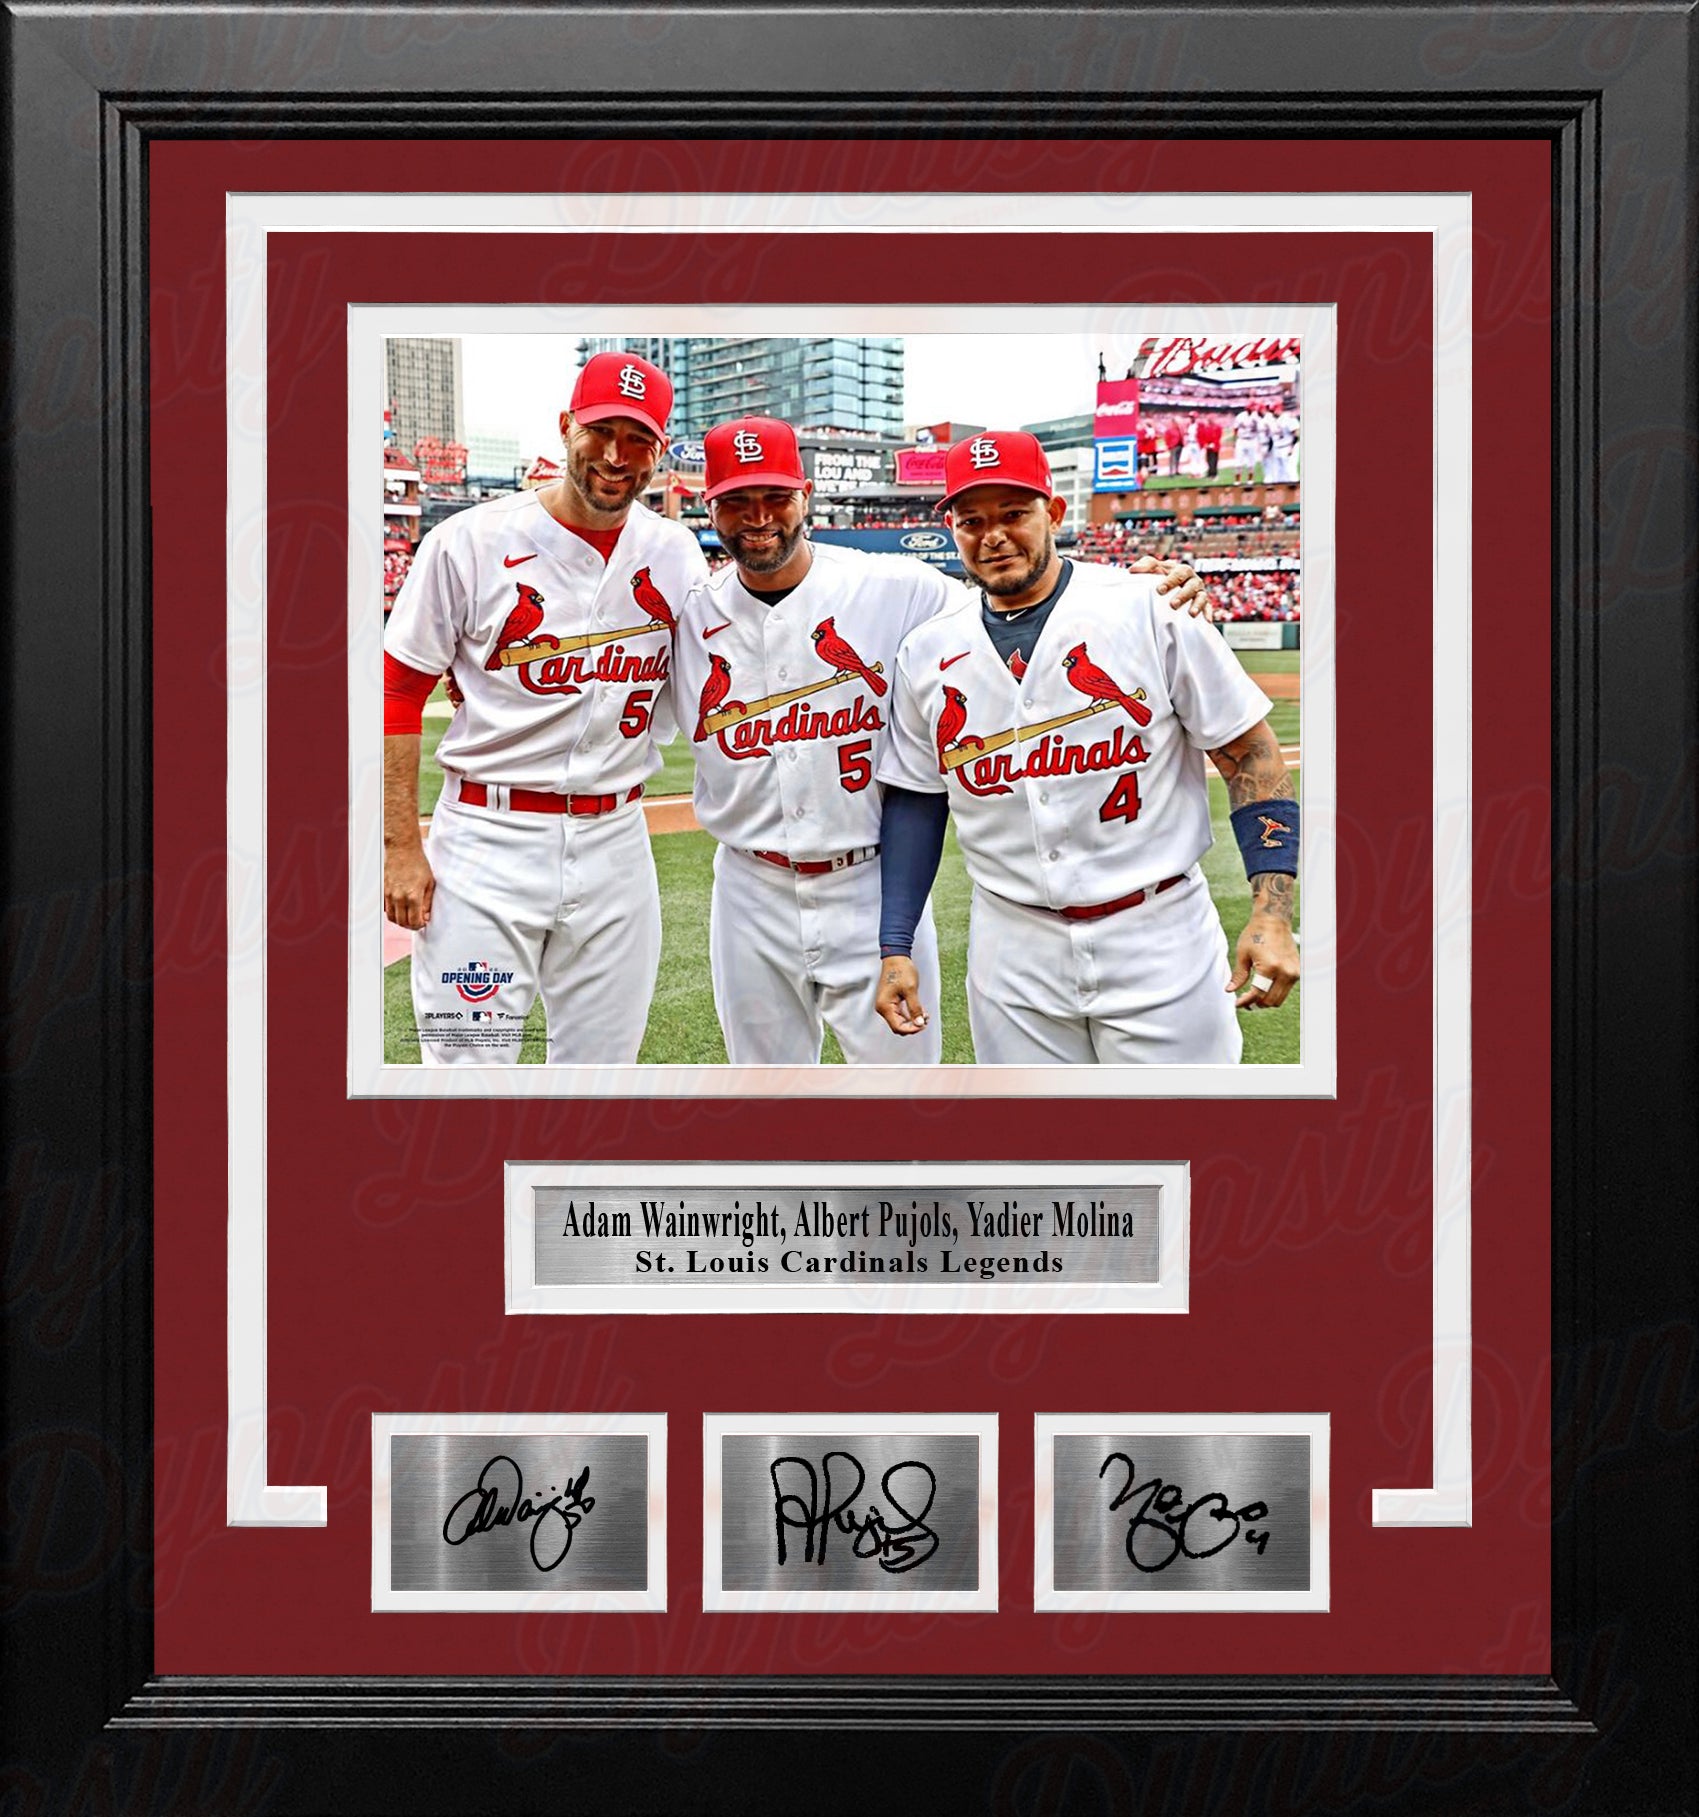 Adam Wainwright, Albert Pujols, & Yadier Molina Cardinals 8x10 Framed Photo  with Engraved Autographs